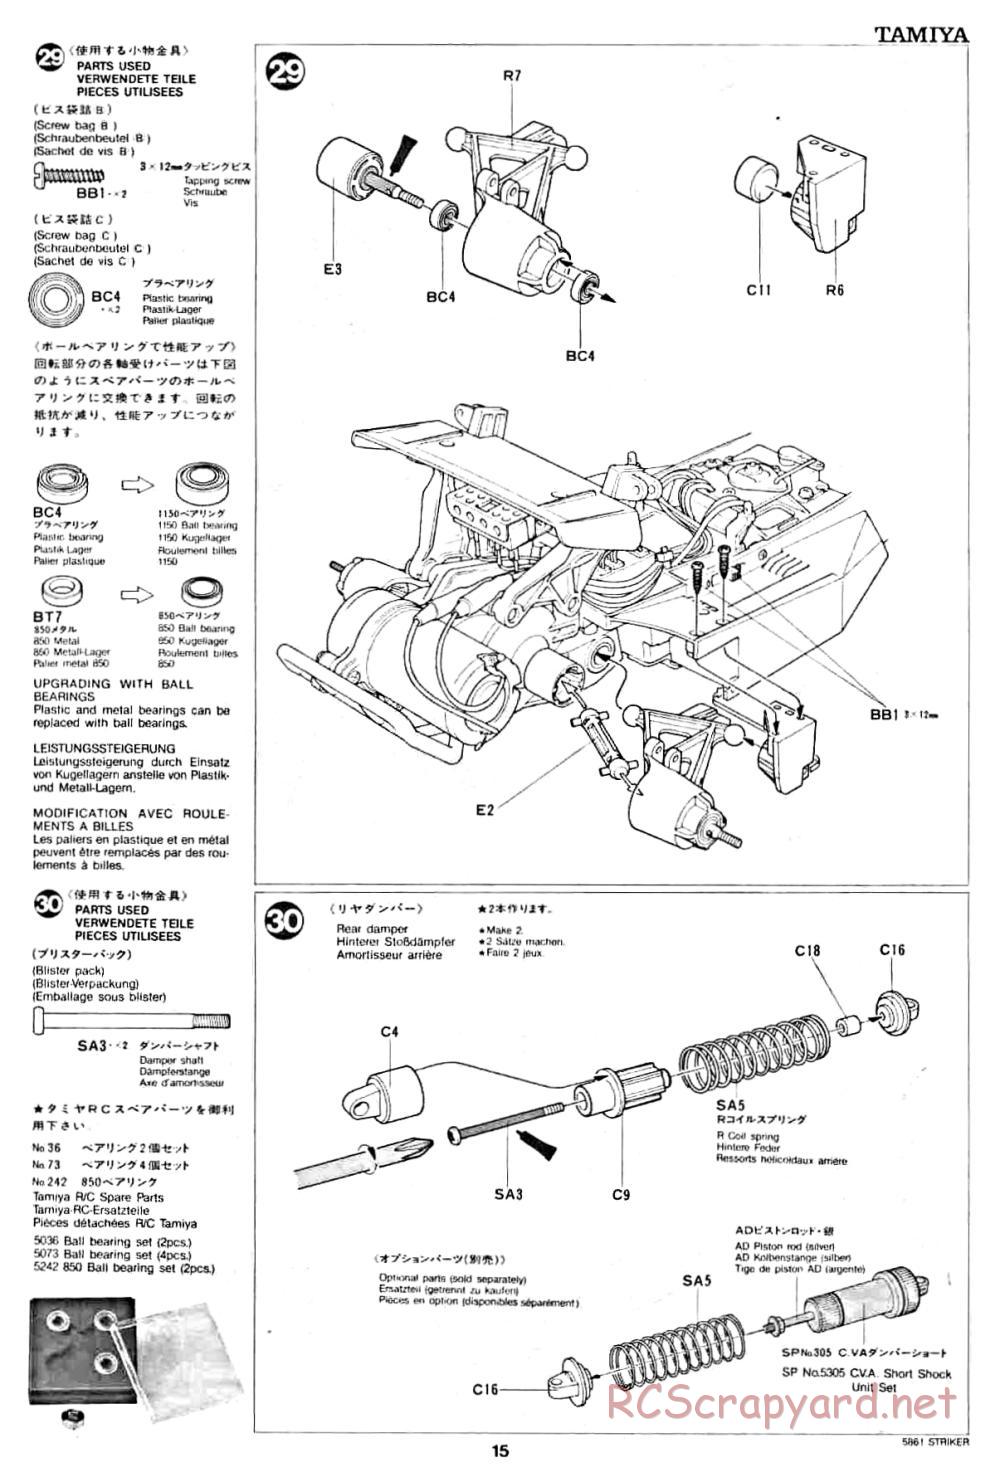 Tamiya - Striker - 58061 - Manual - Page 15